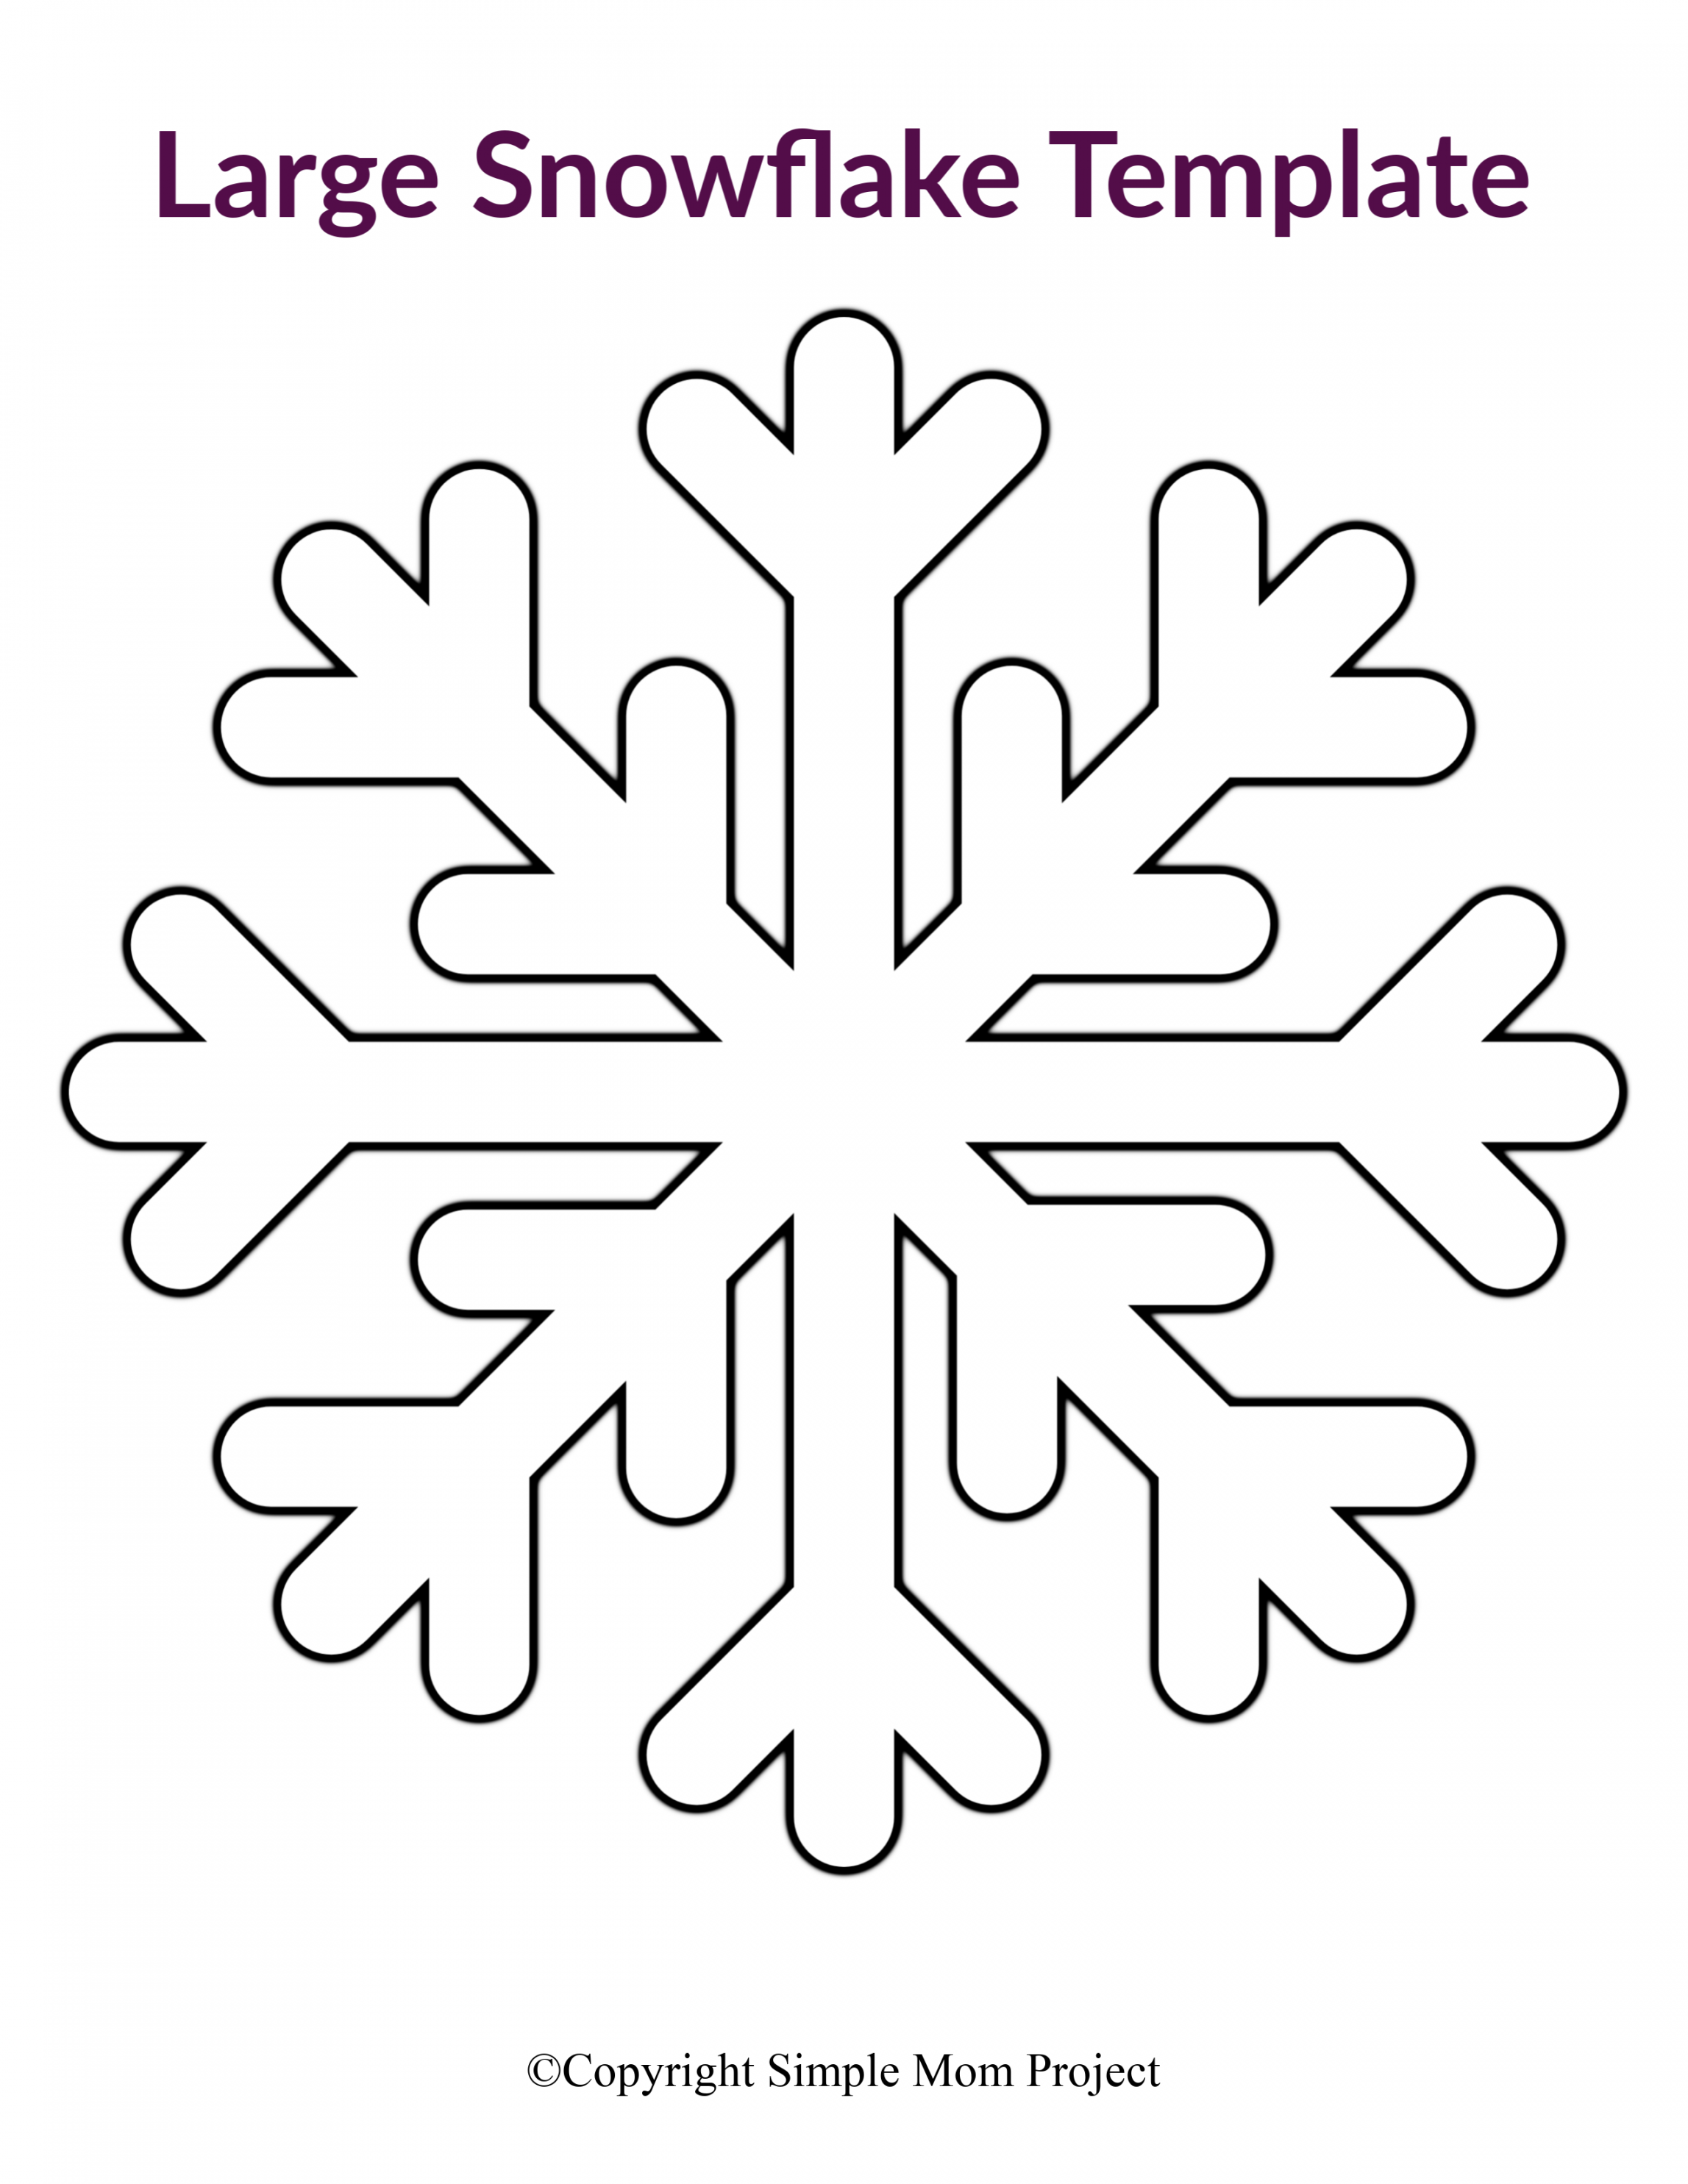 Free Printable Large Snowflake Templates - Simple Mom Project - FREE Printables - Printable Snowflake Cutouts